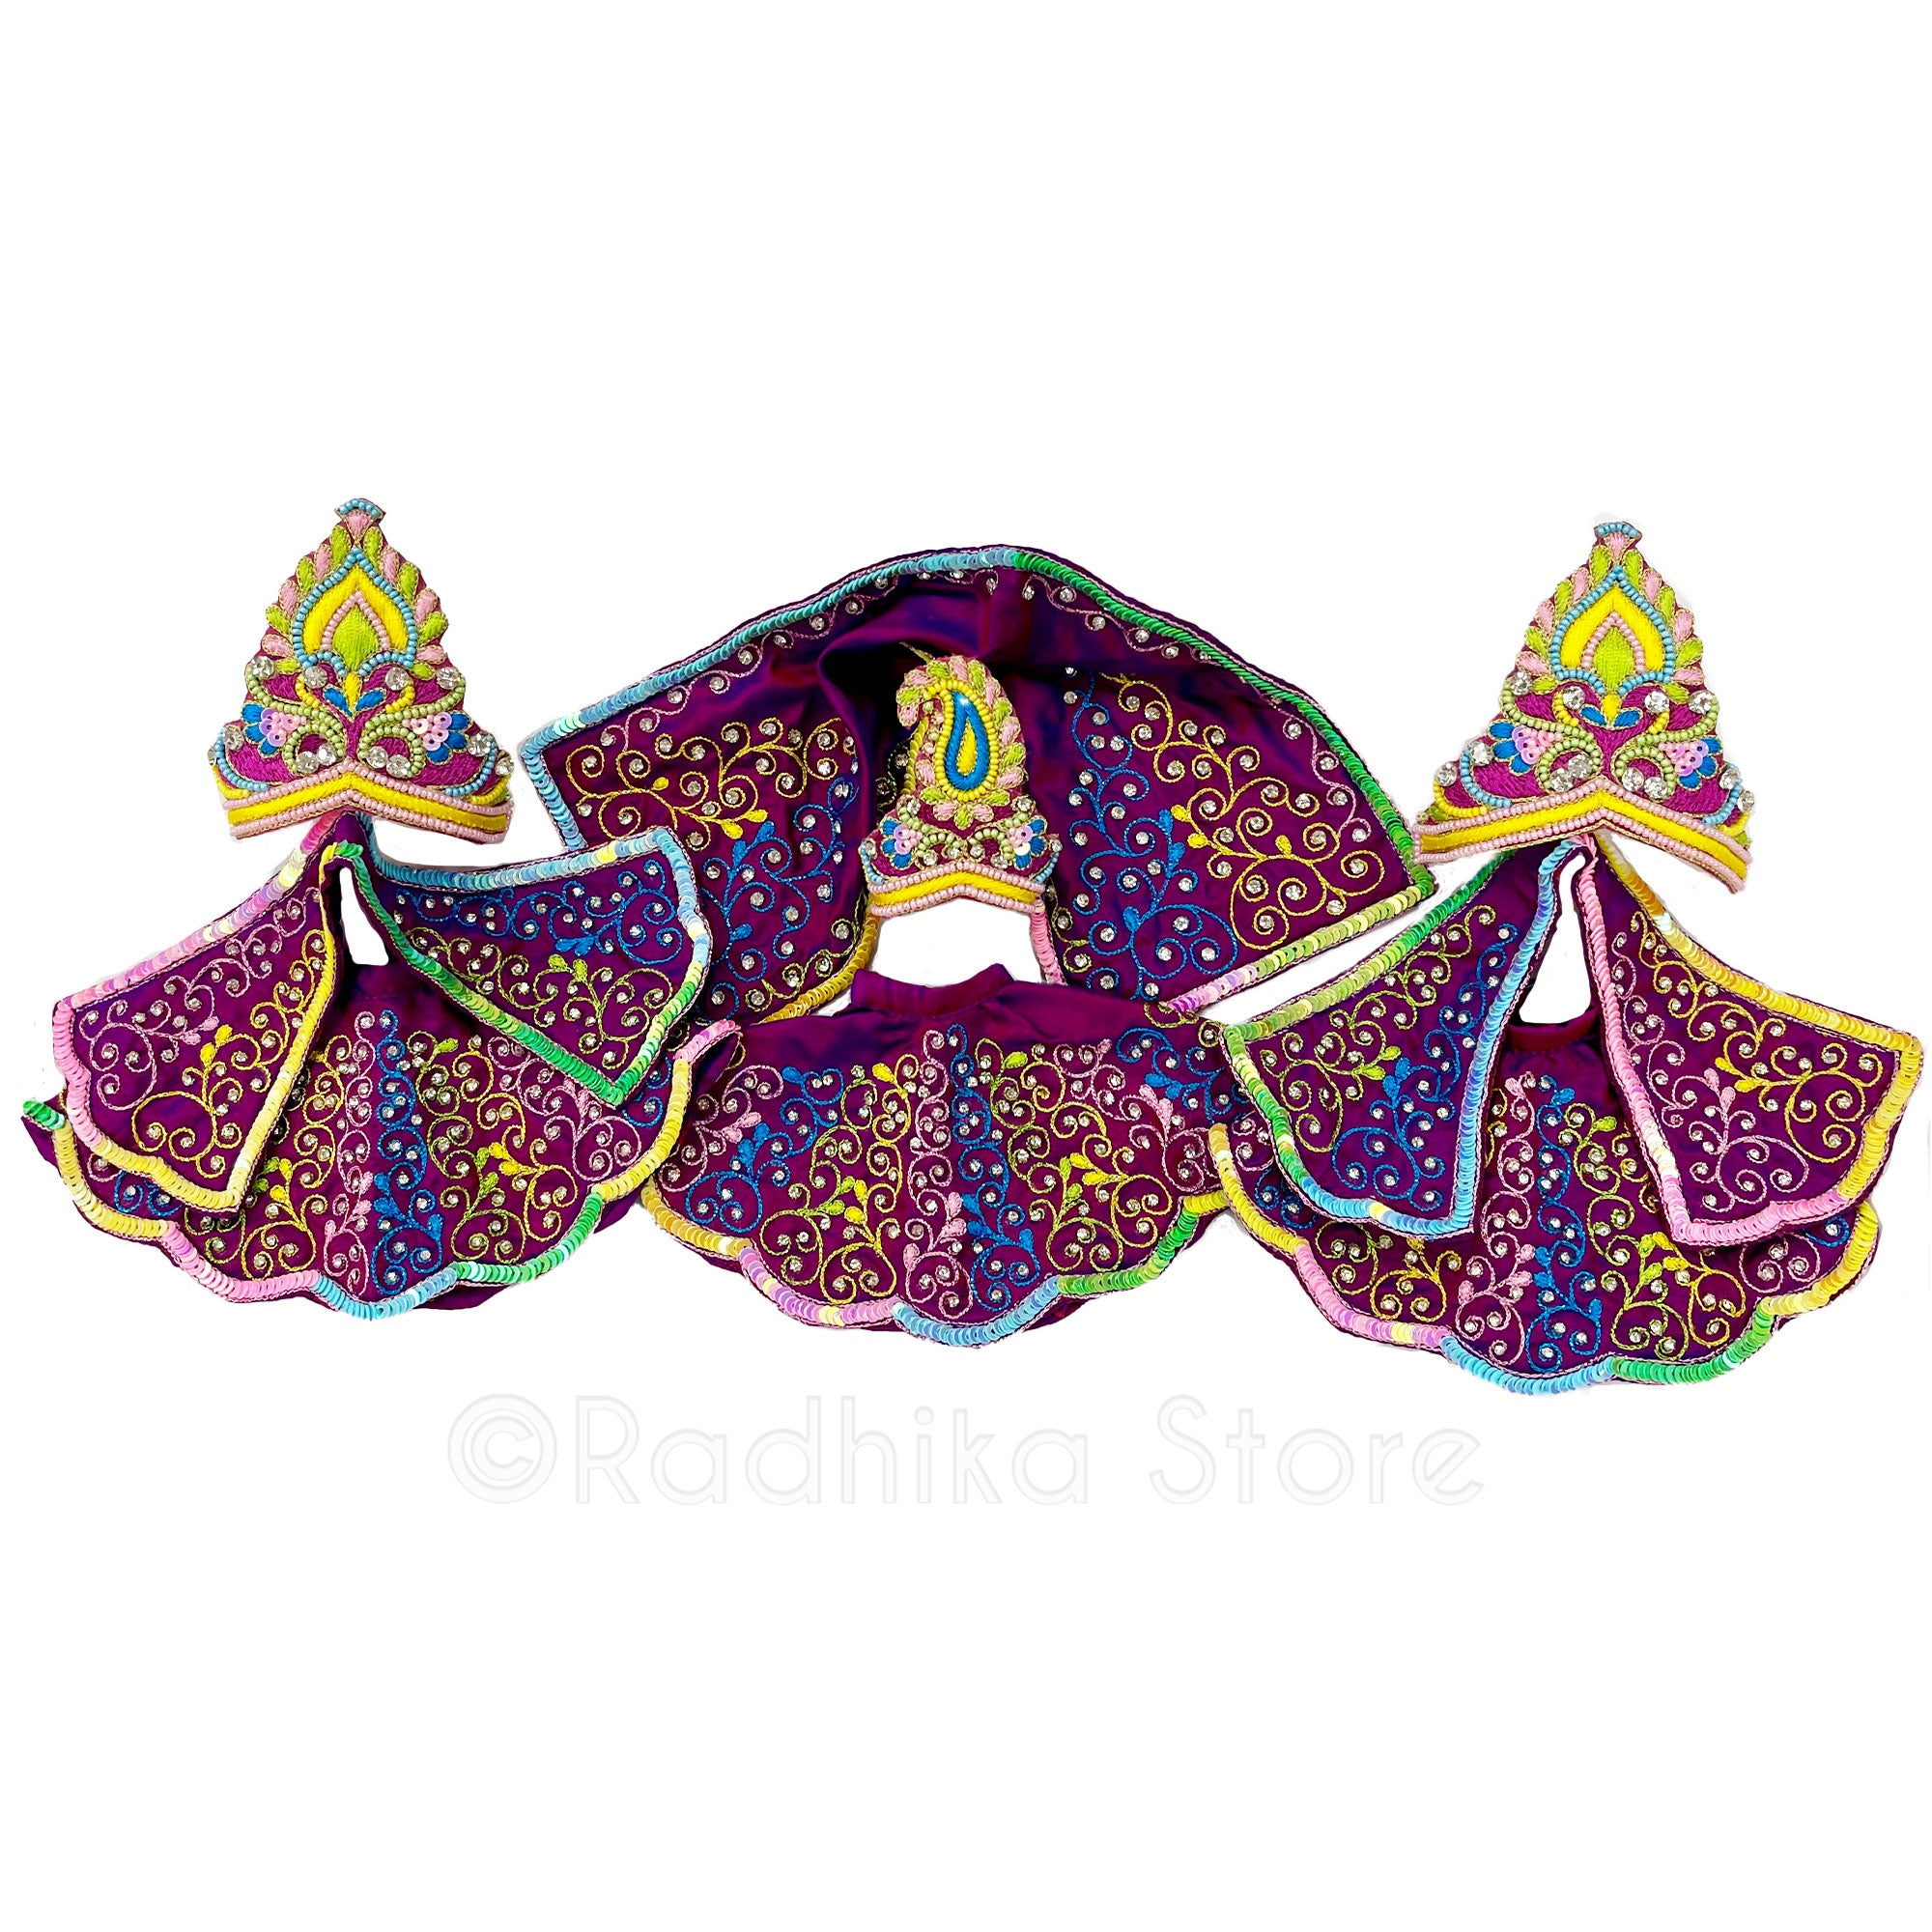 Transcendental Fireworks - All Silk - Purple - Jagannath Baladeva Subhadra Deity Outfit